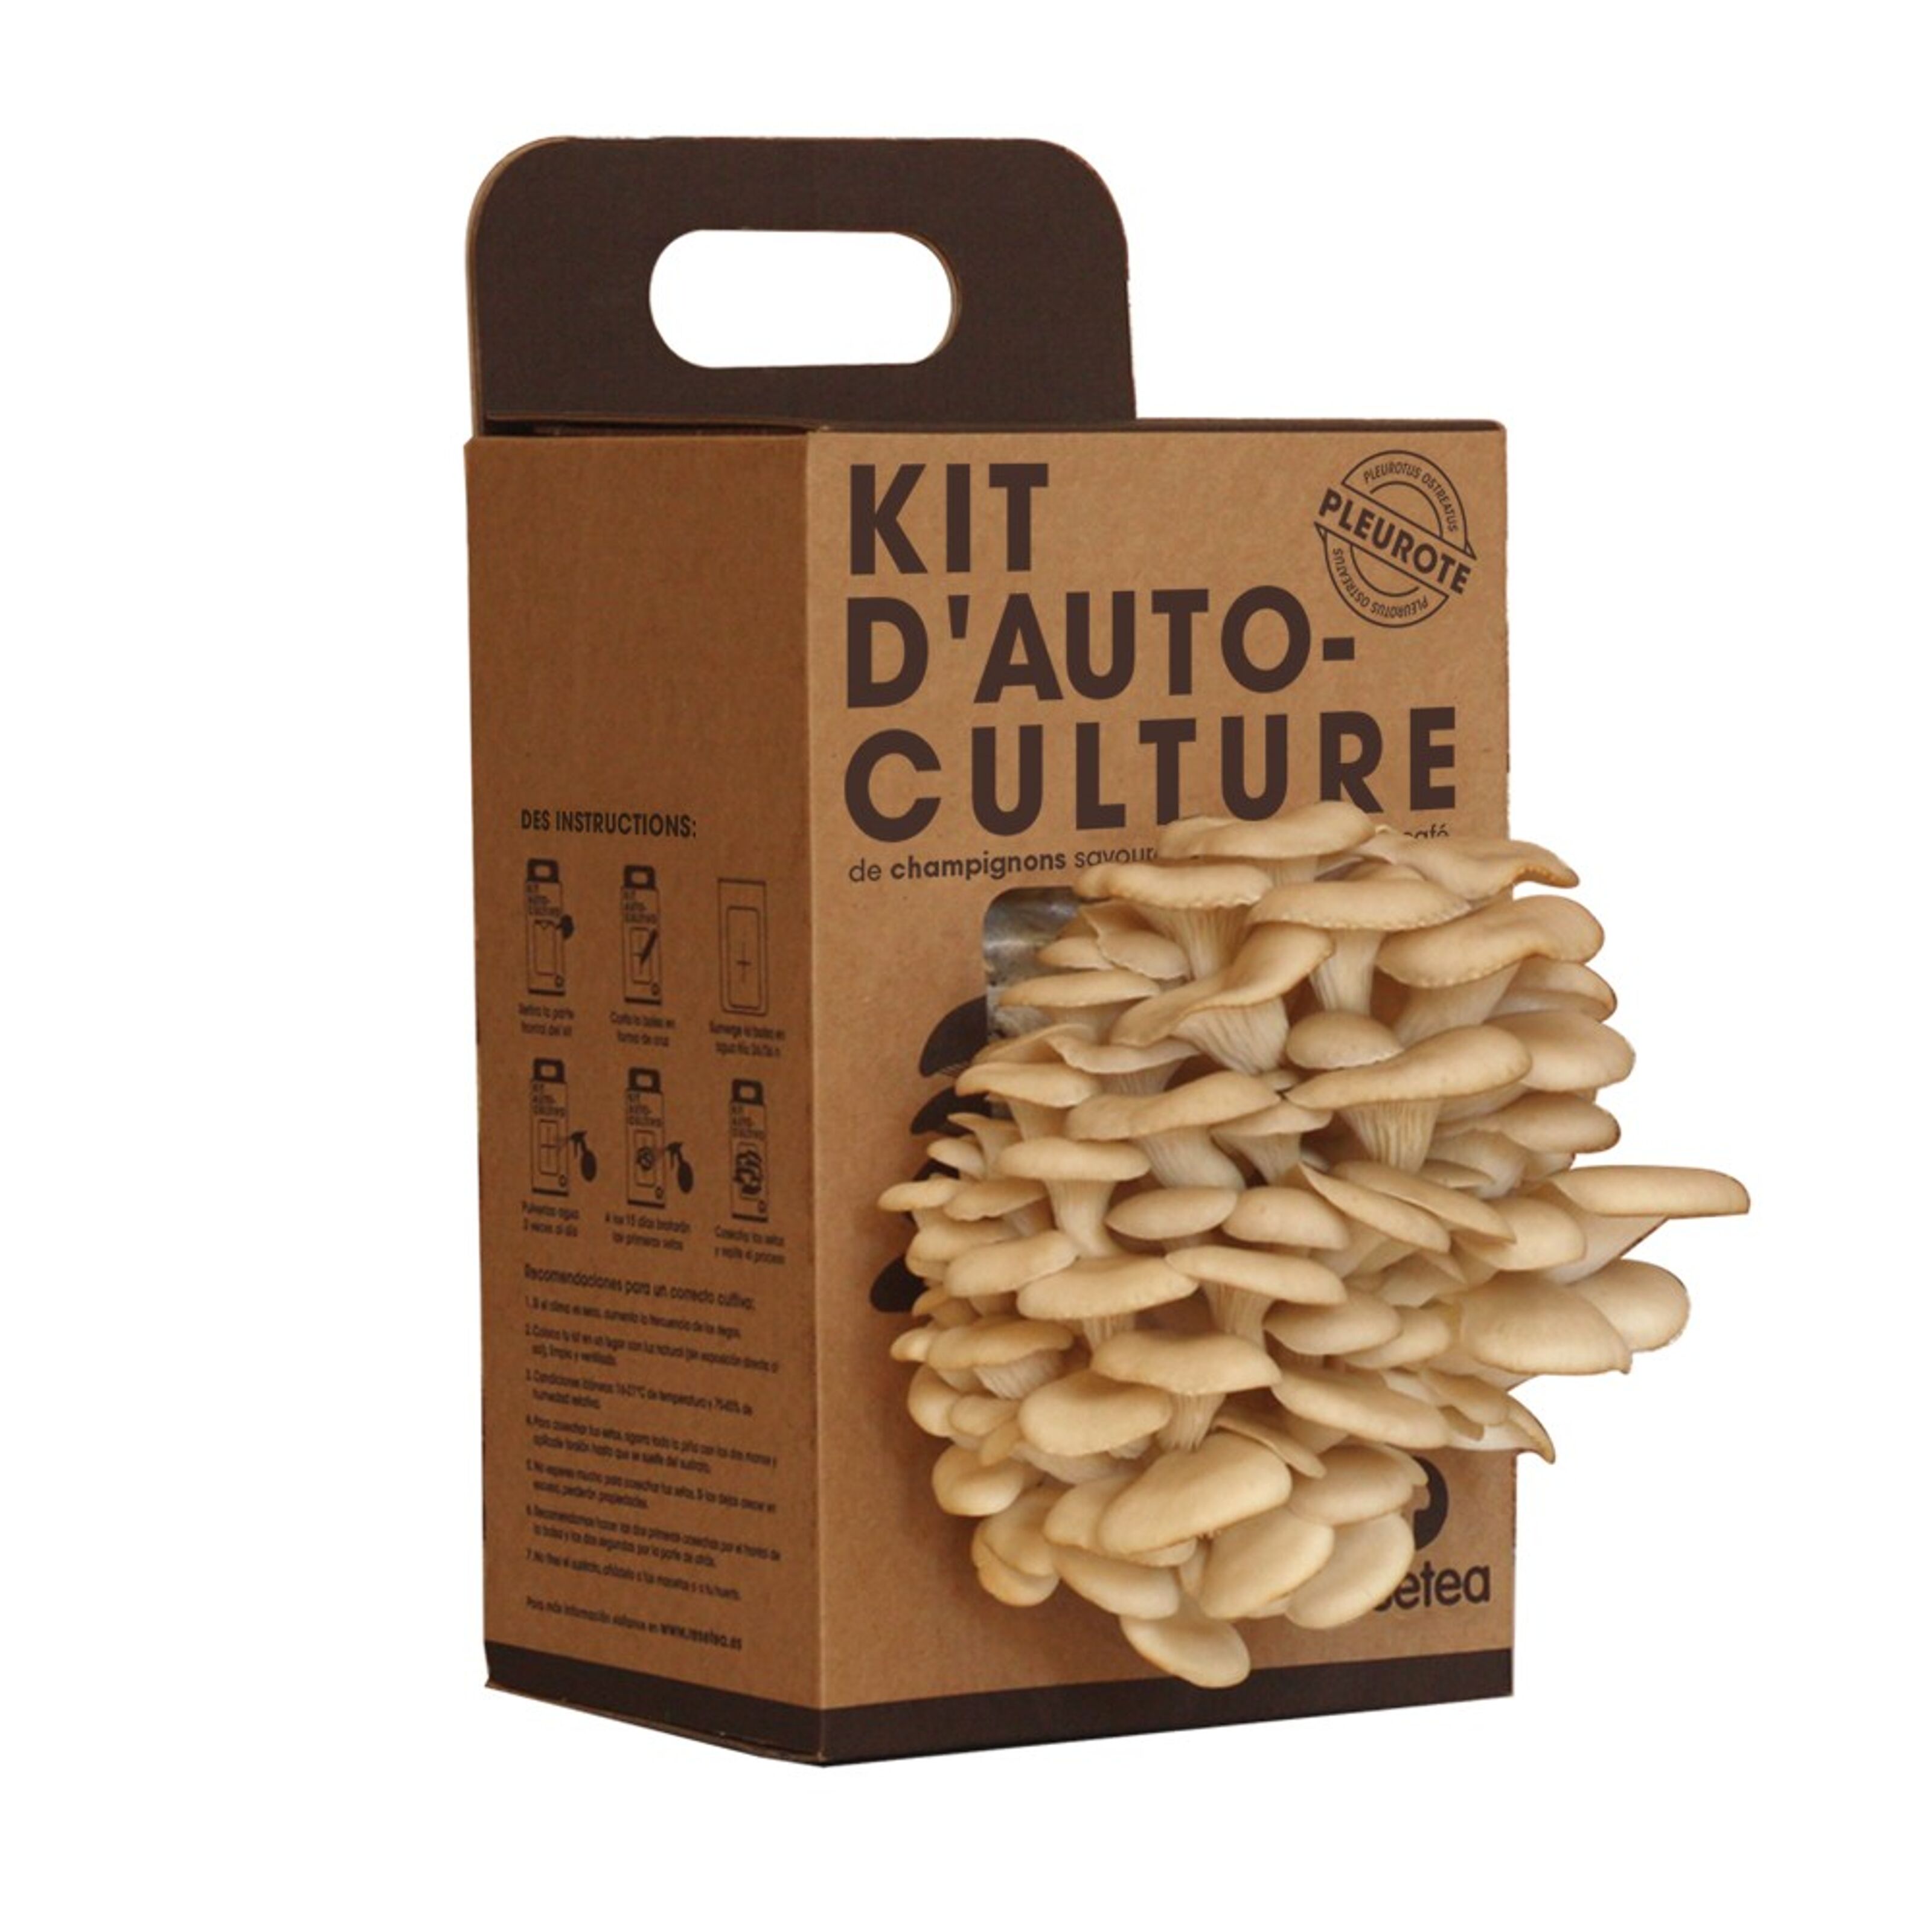 kit champignons